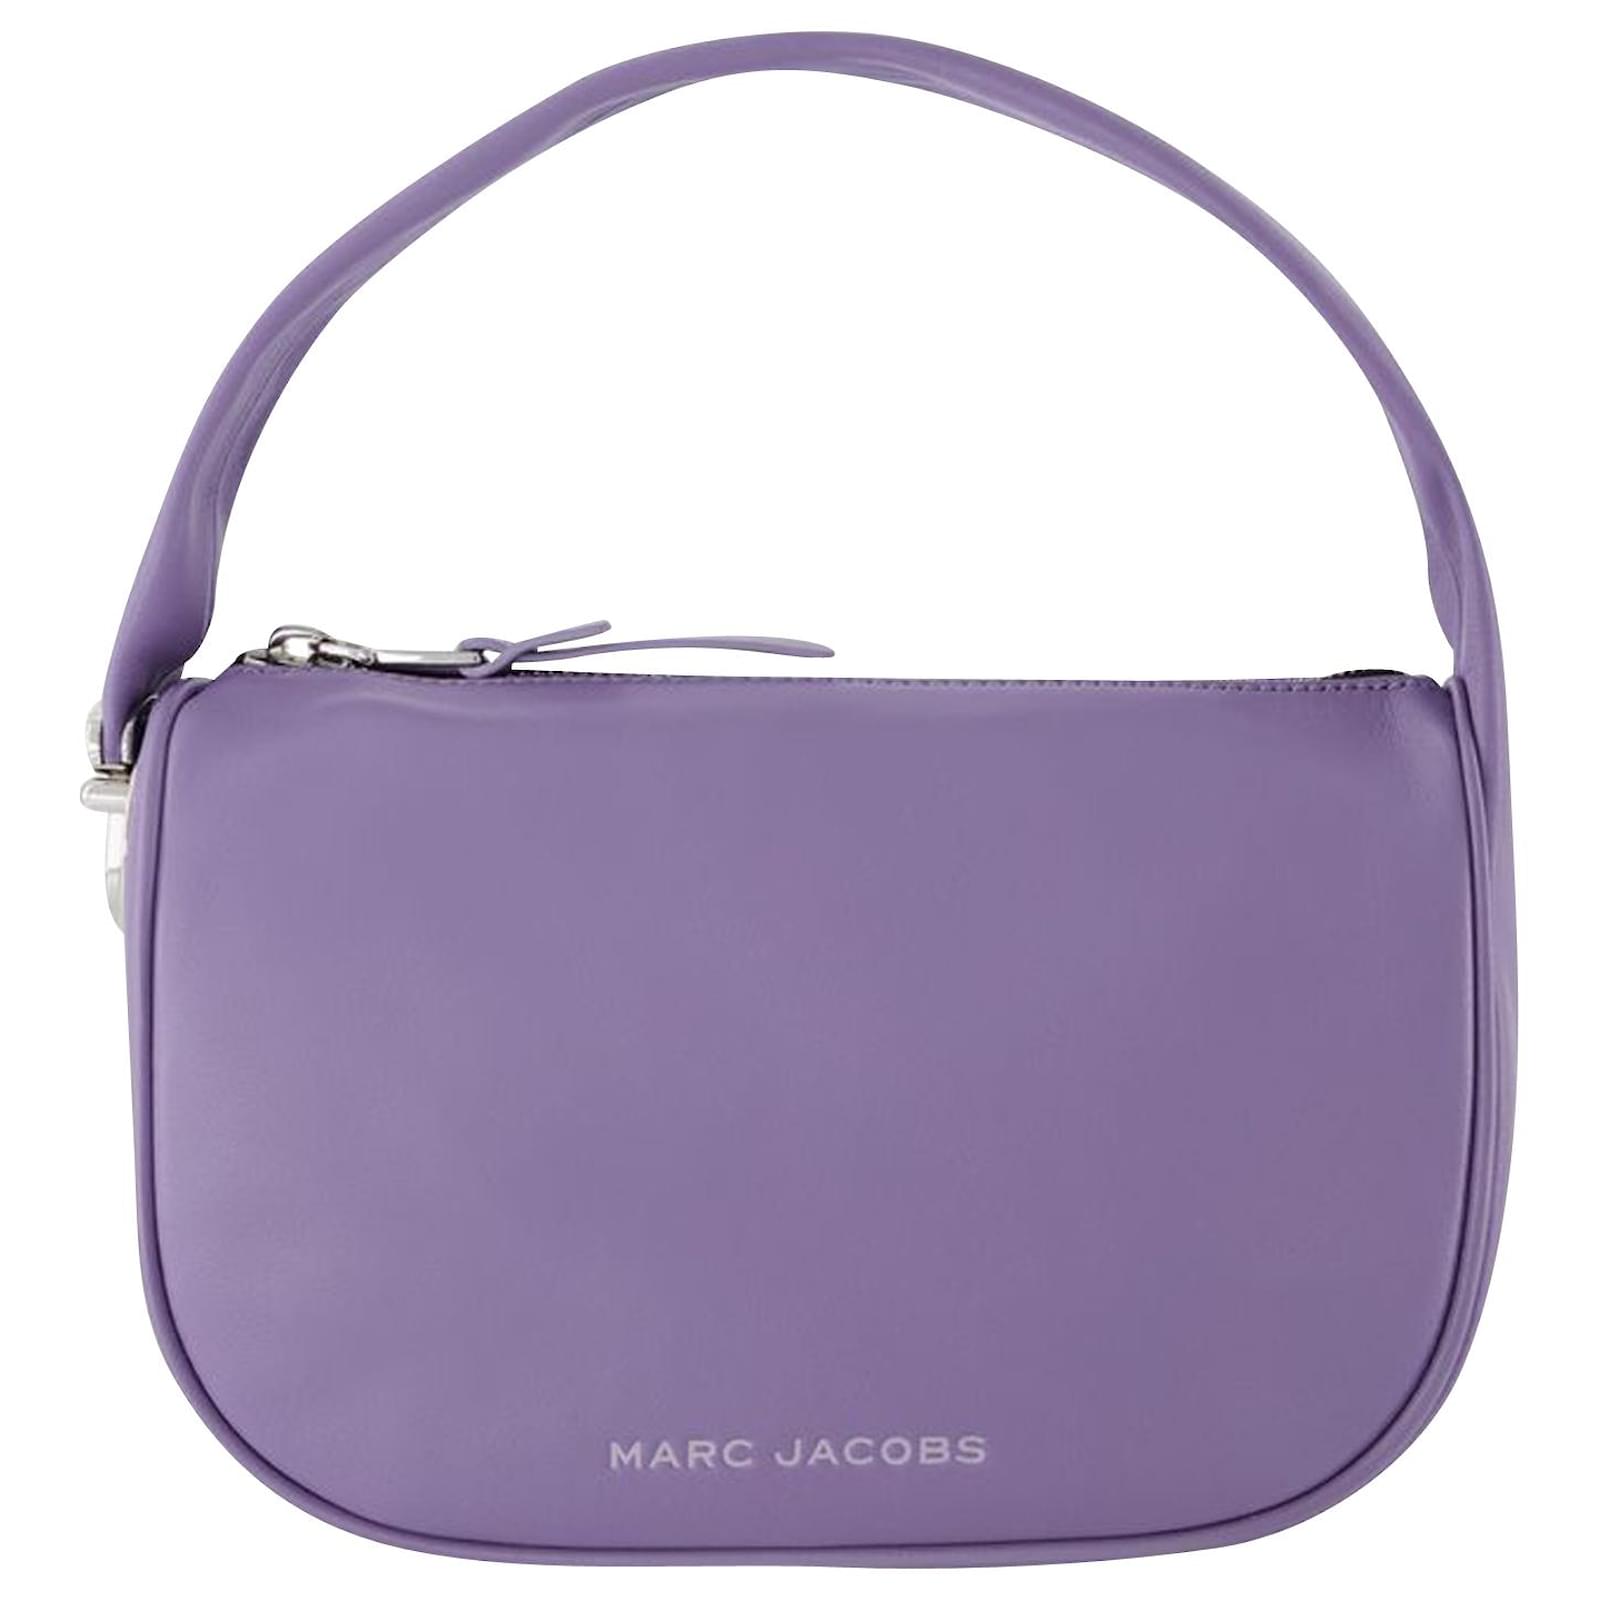 Marc Jacobs Purple Small Snapshot Bag Marc Jacobs